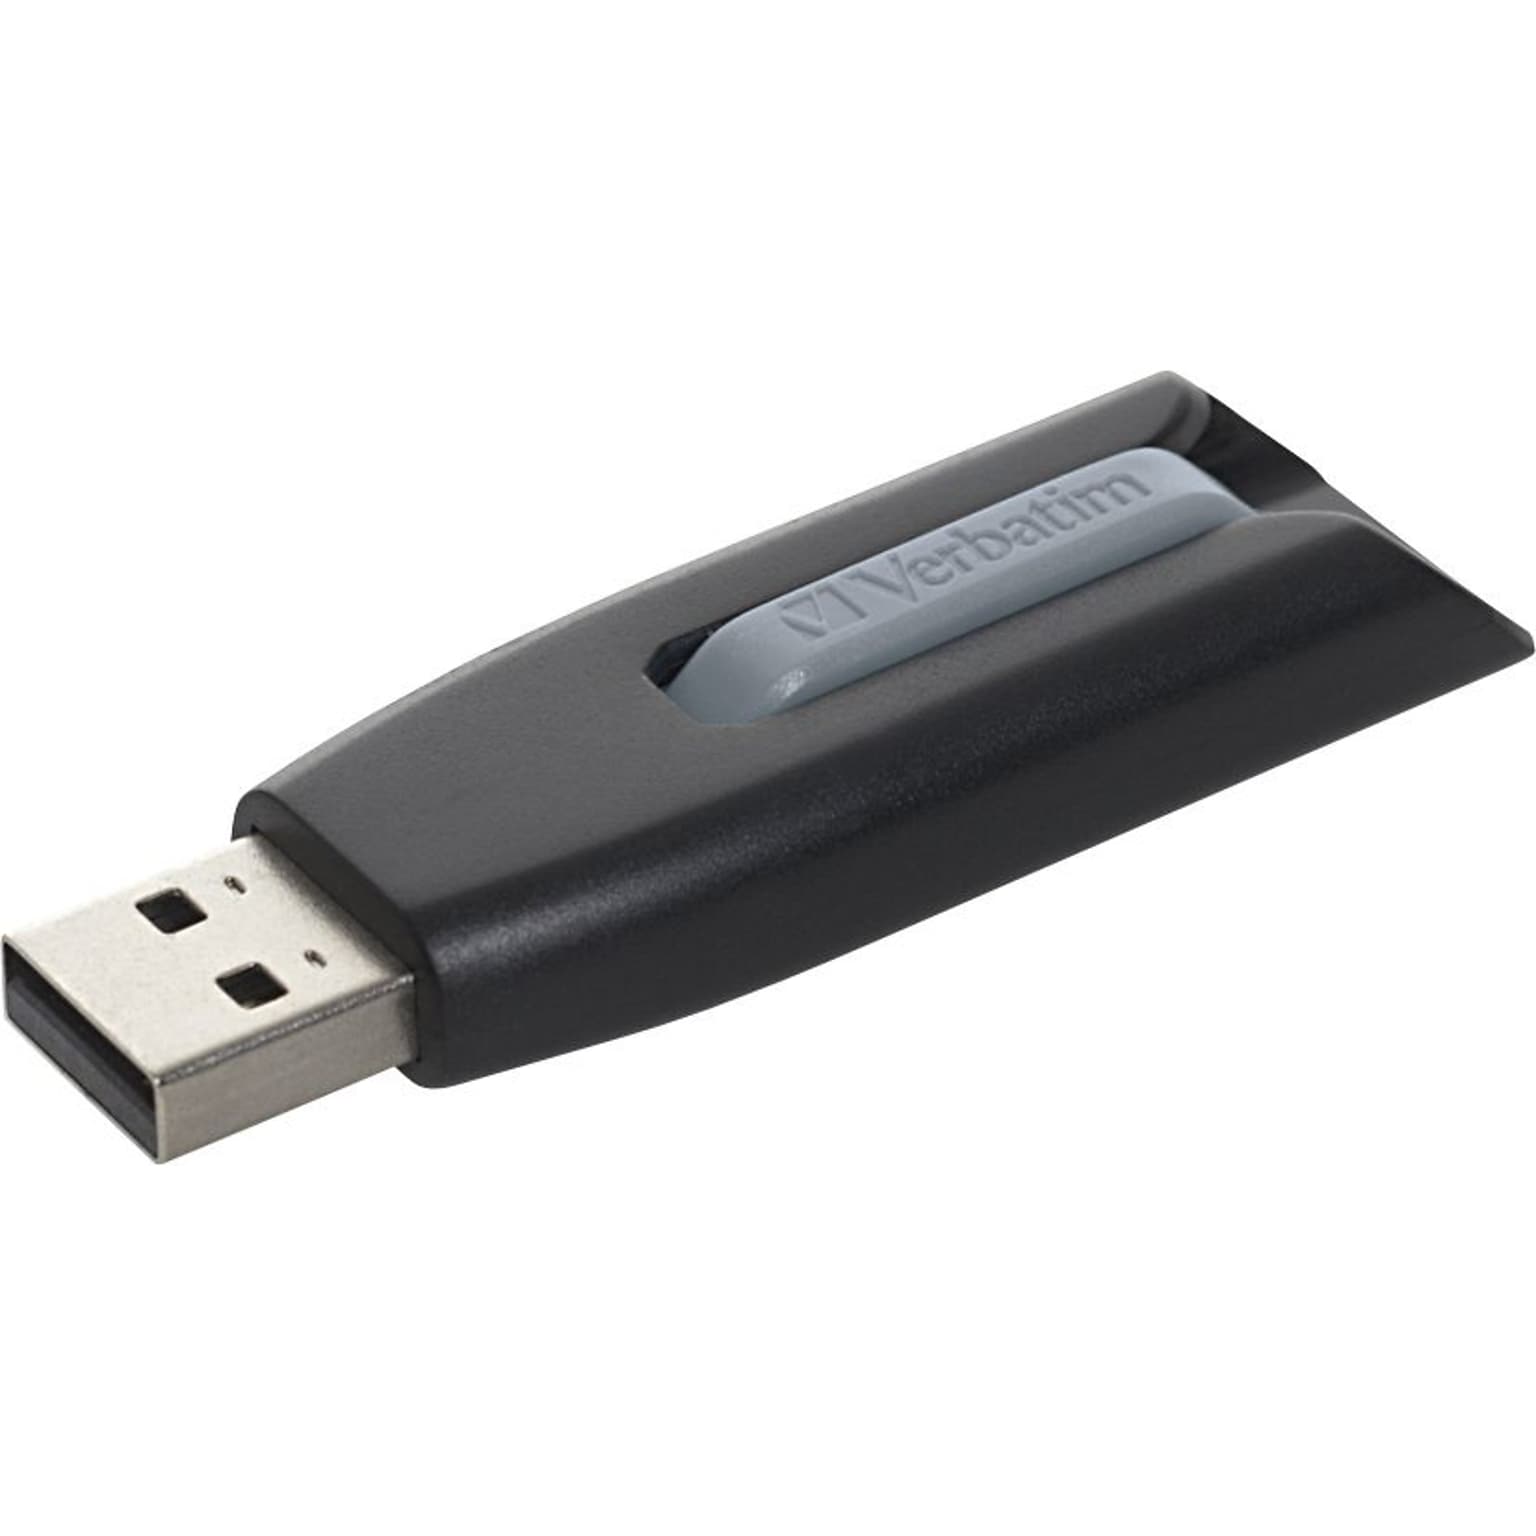 Verbatim Store n Go V3 49173 32GB USB 3.0 Flash Drive, Black/Gray